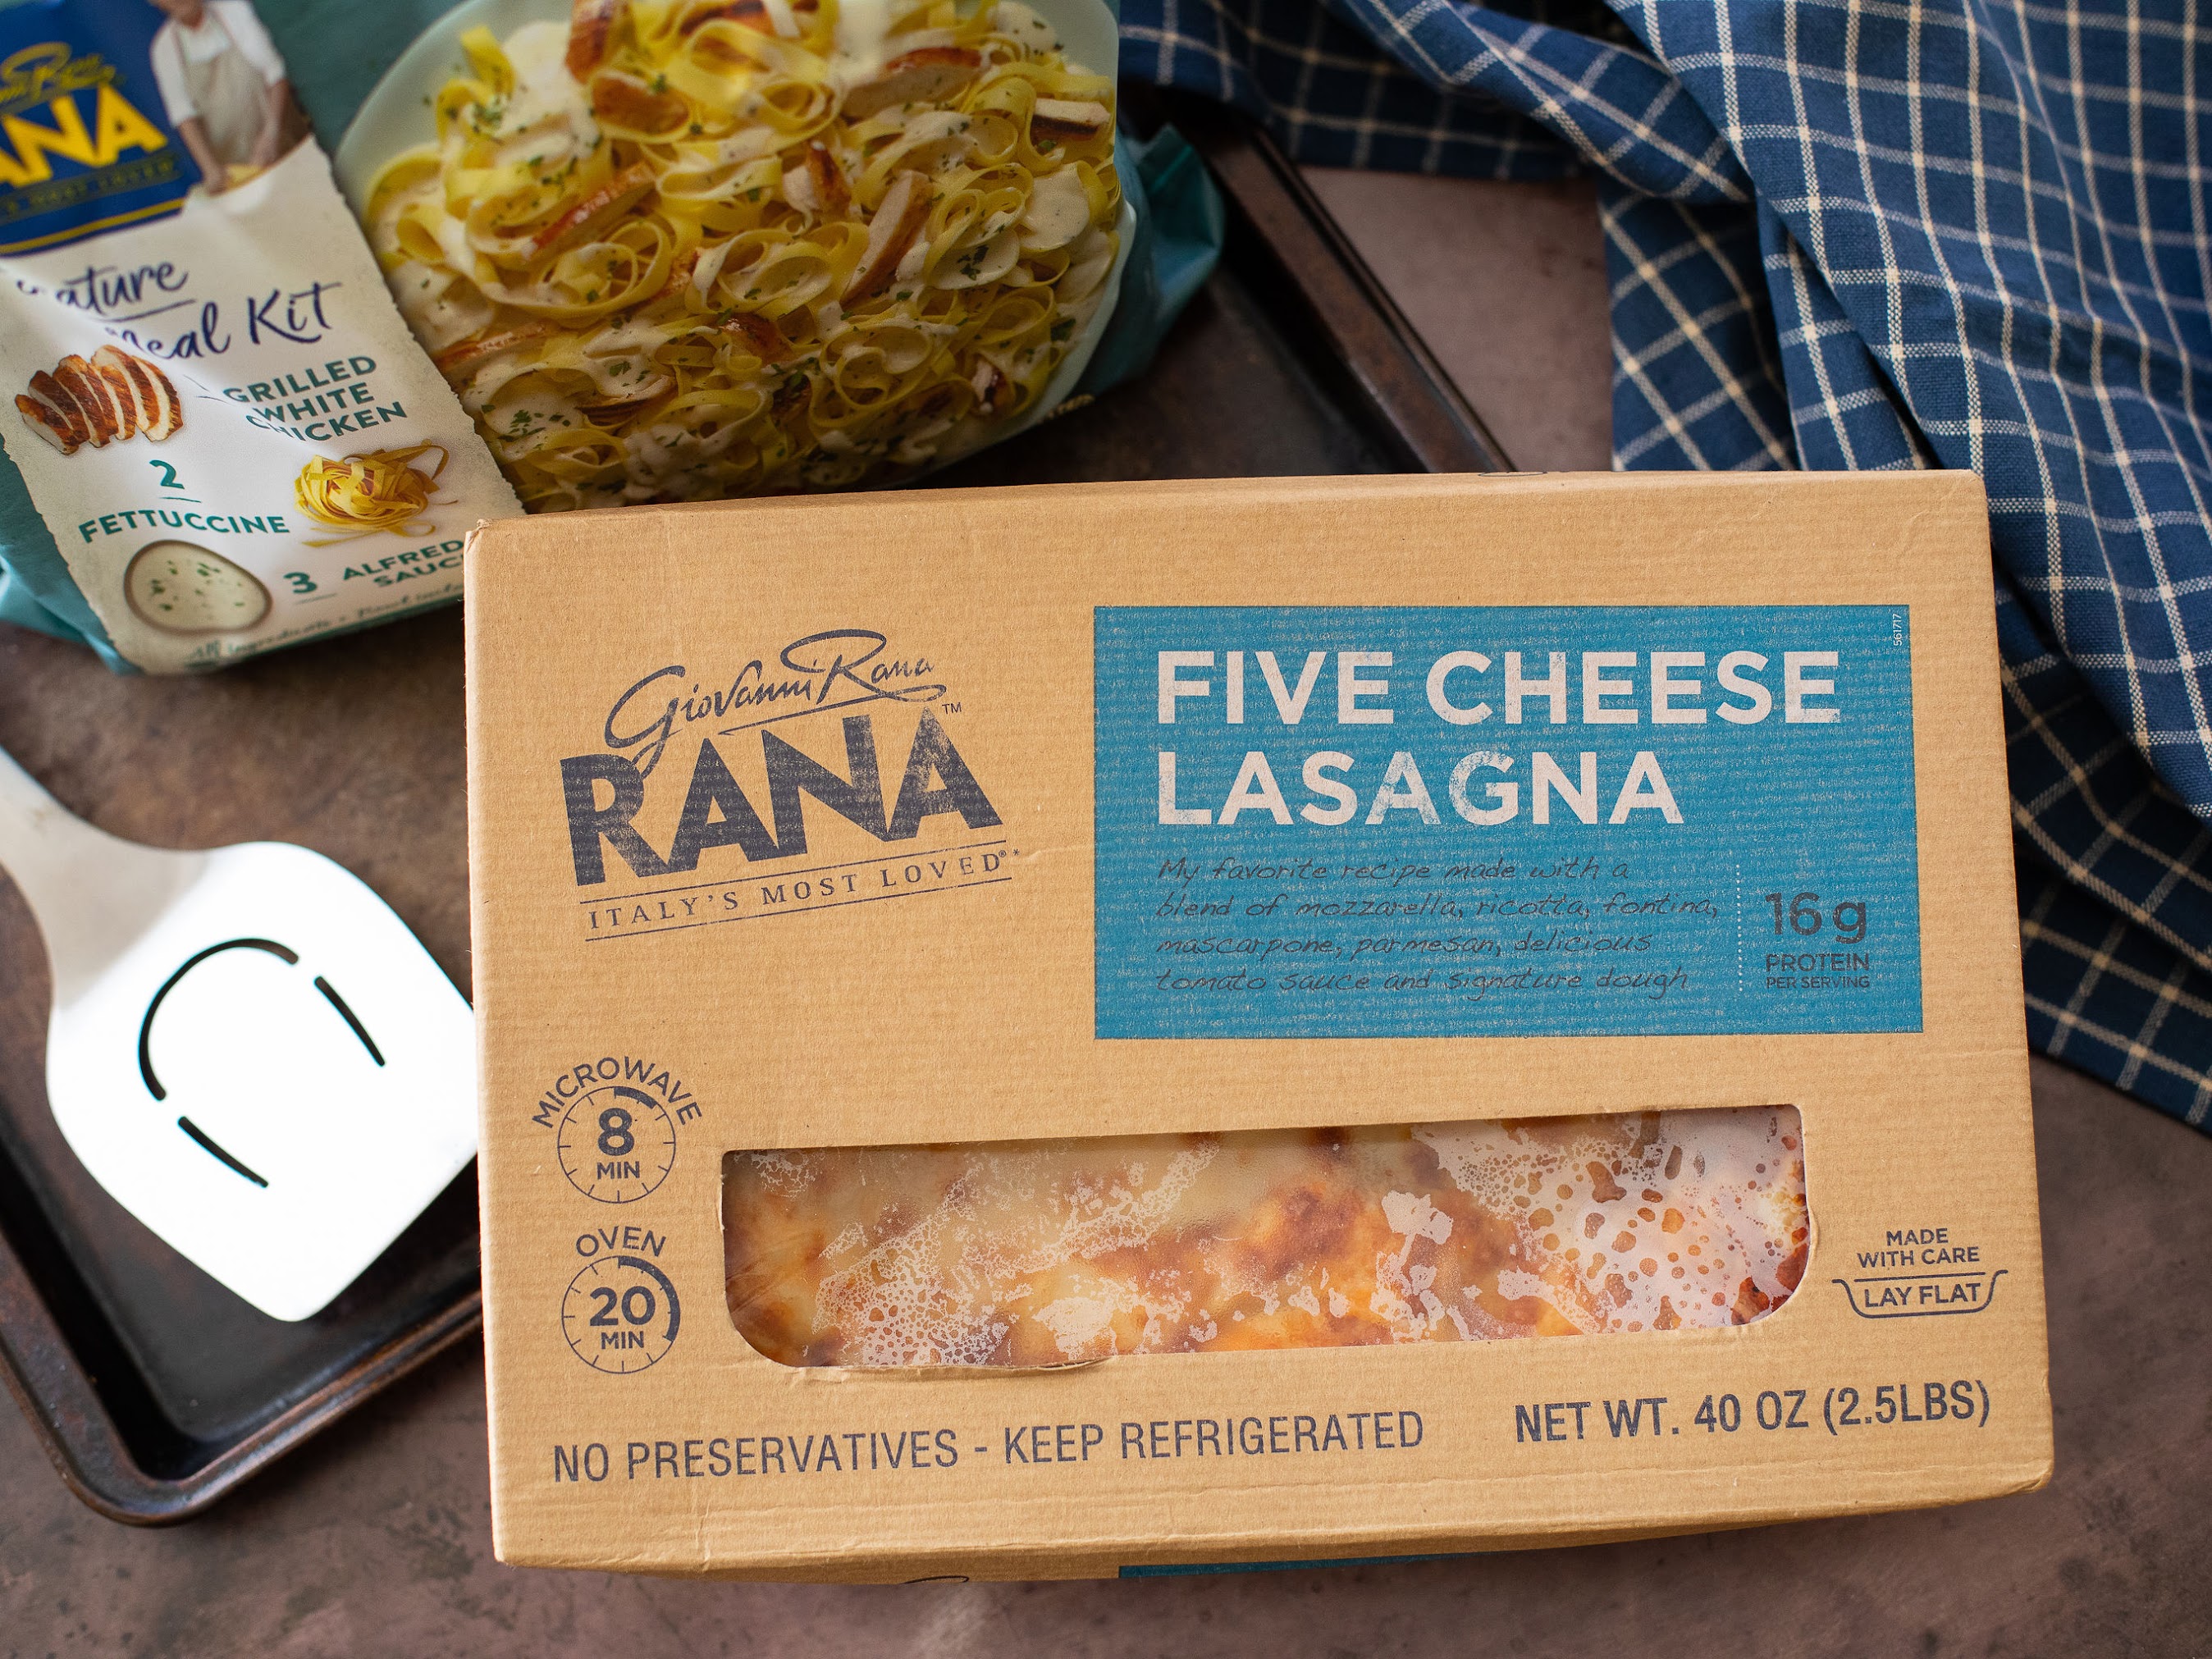 Grab A Rana Pasta Meal Kit For Just $9.99 At Publix (Regular Price $14.79)